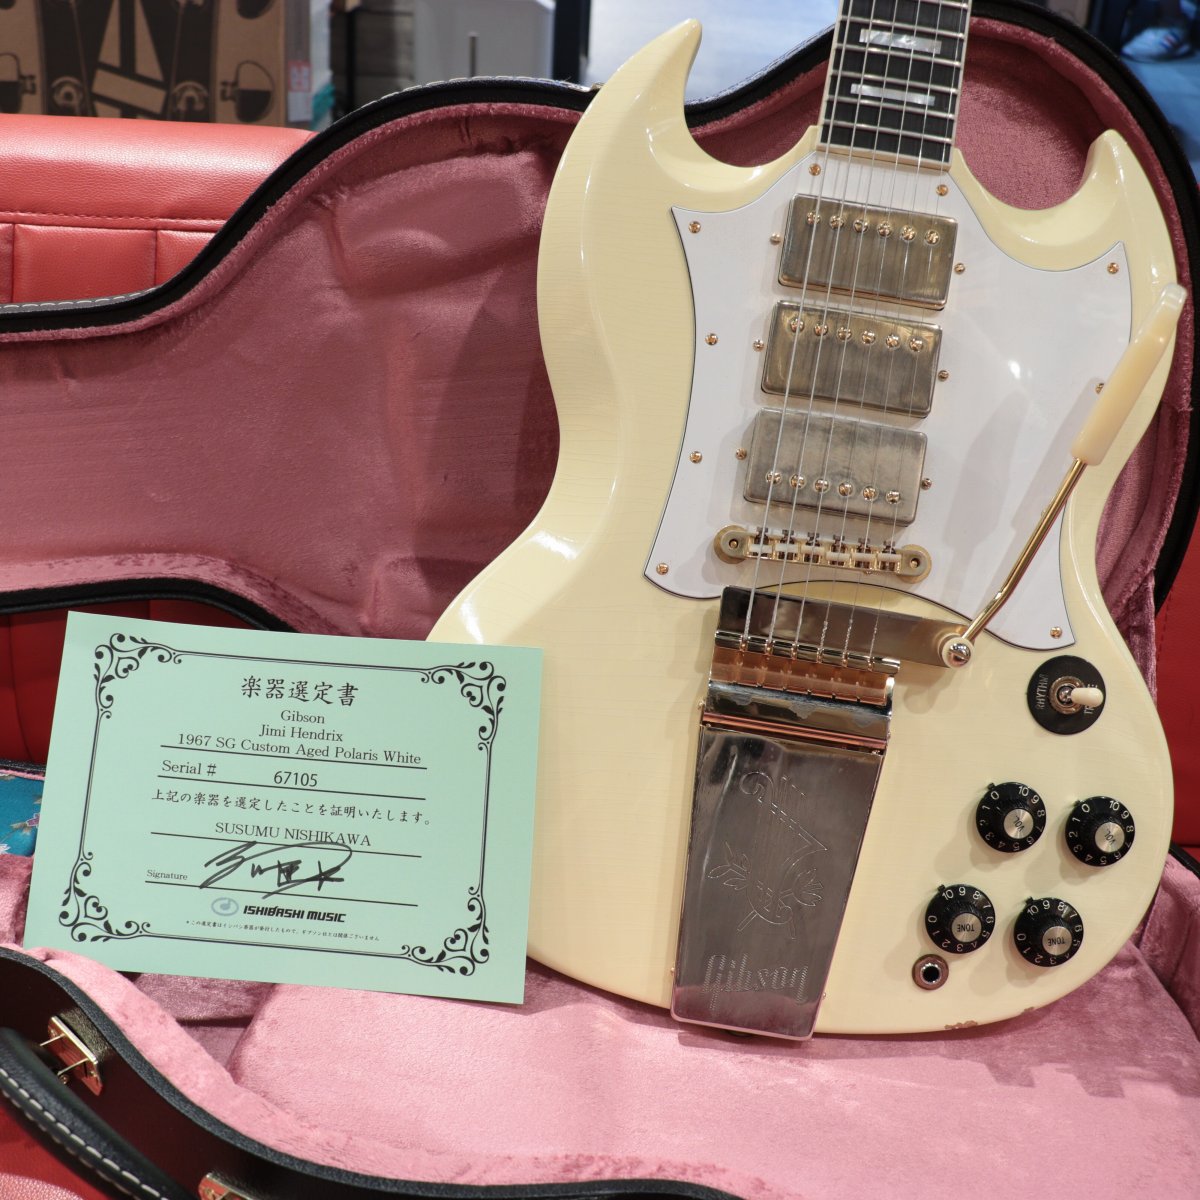 Gibson Jimi Hendrix 1967 SG Custom Aged Polaris White